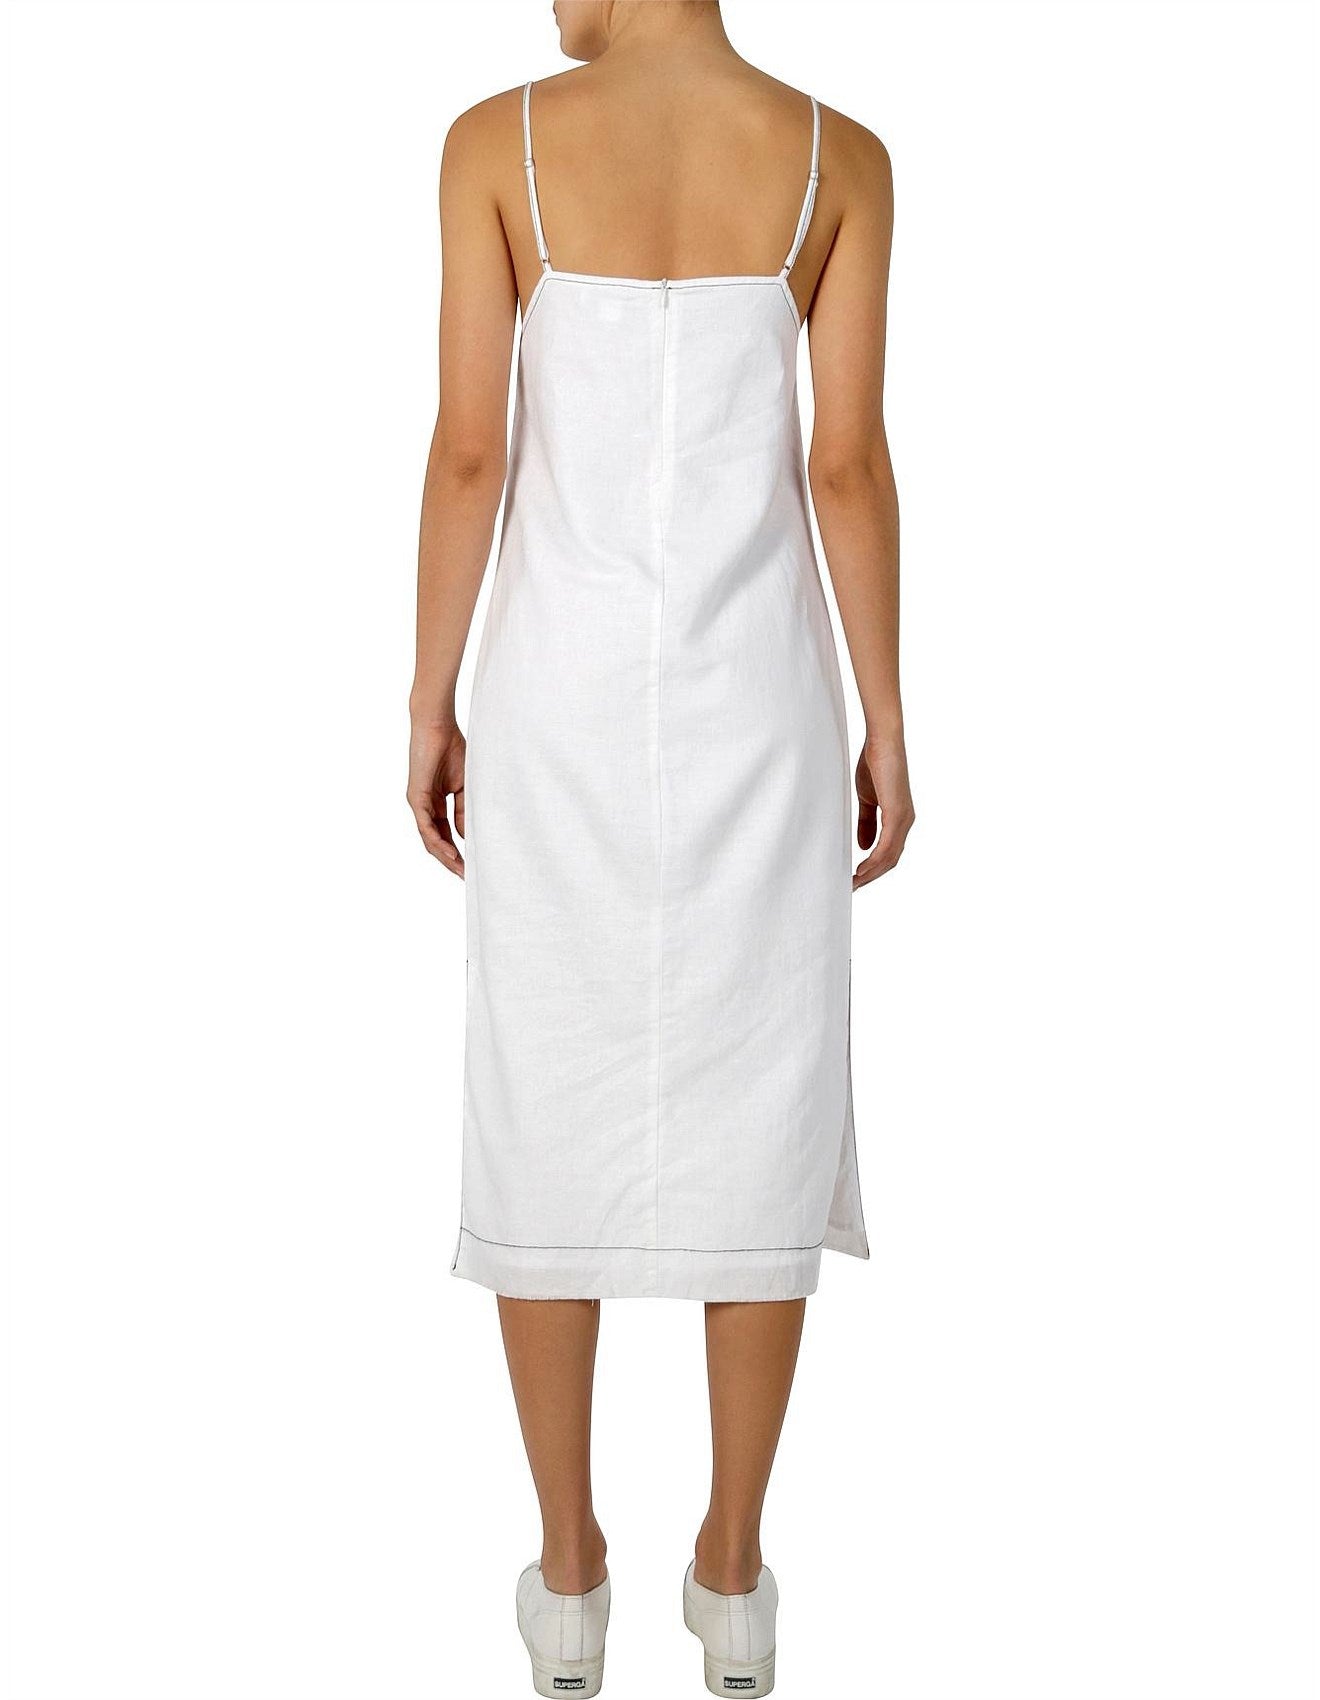 Ladies white linen Dress-Nude Lucy-Grace Contrast Stitch Dress